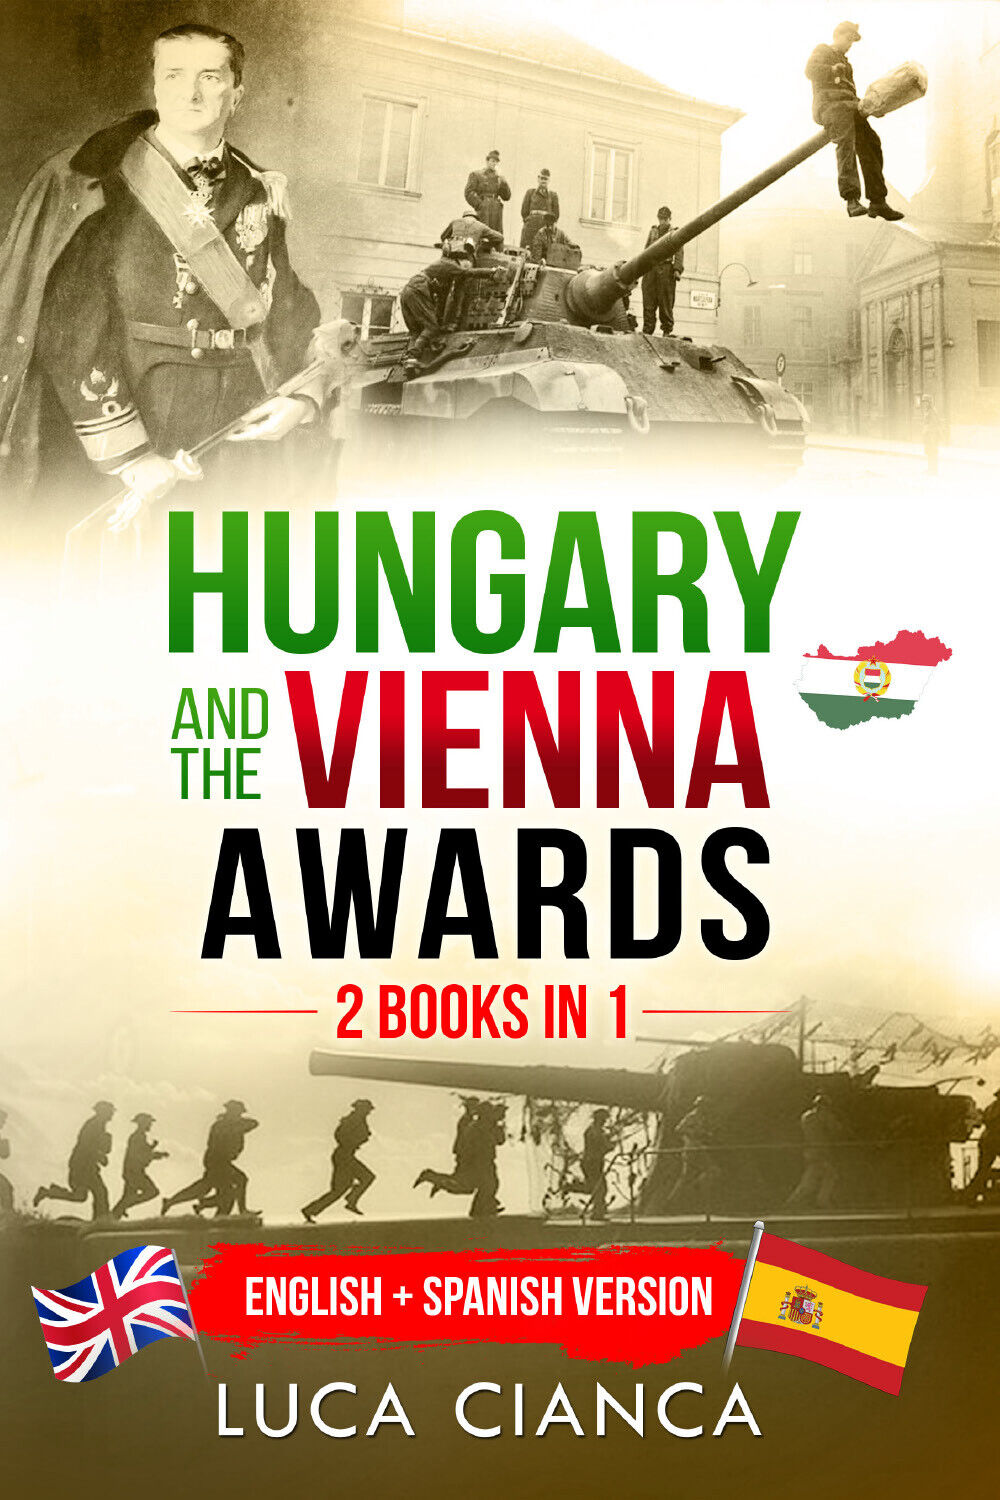 Hungary and the Vienna Awards. (2 Books in 1). English + Spanish Version di Luca libro usato